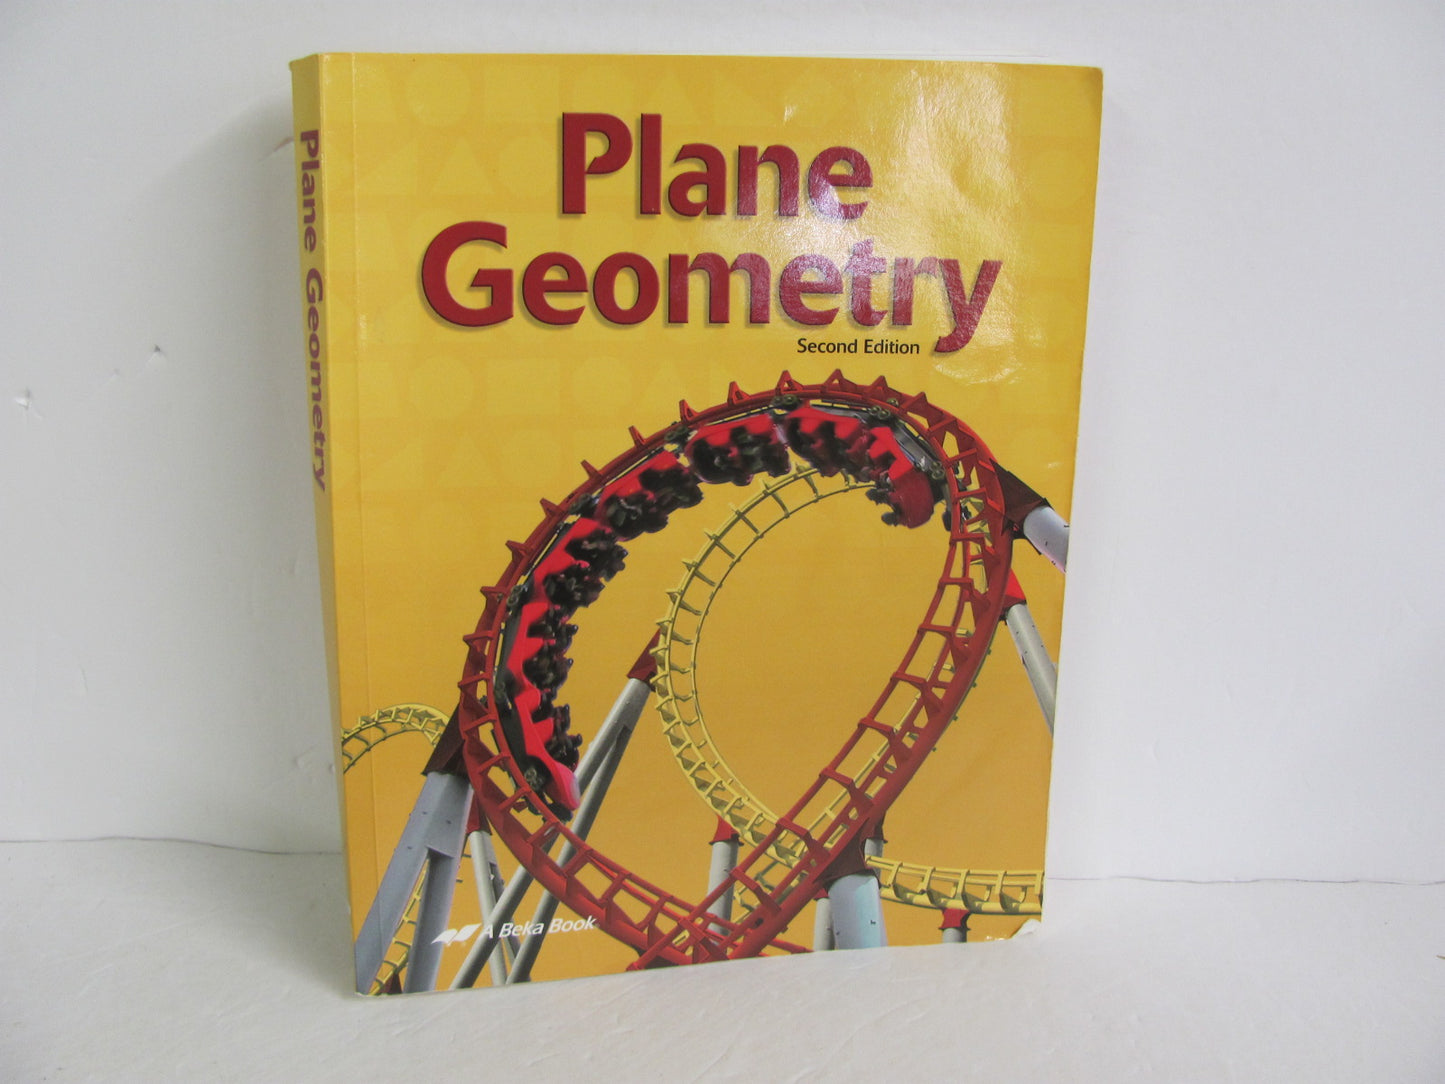 Plane Geometry Abeka Student Book Pre-Owned 11th Grade Mathematics Textbooks